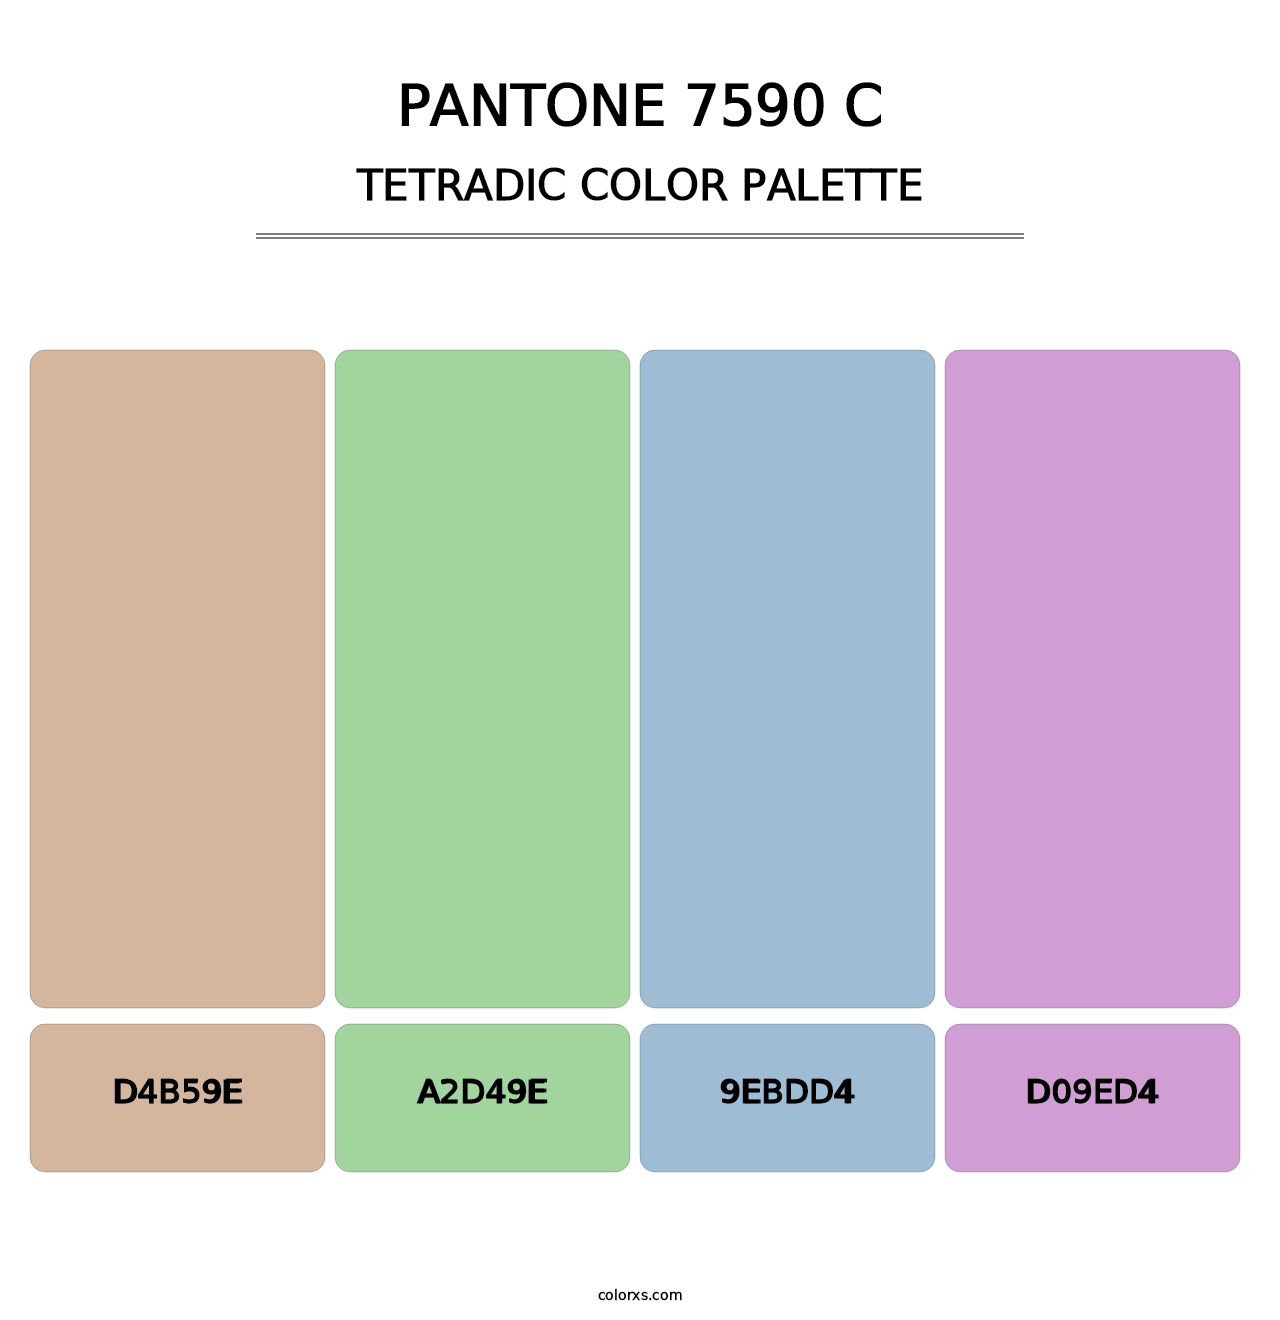 PANTONE 7590 C - Tetradic Color Palette